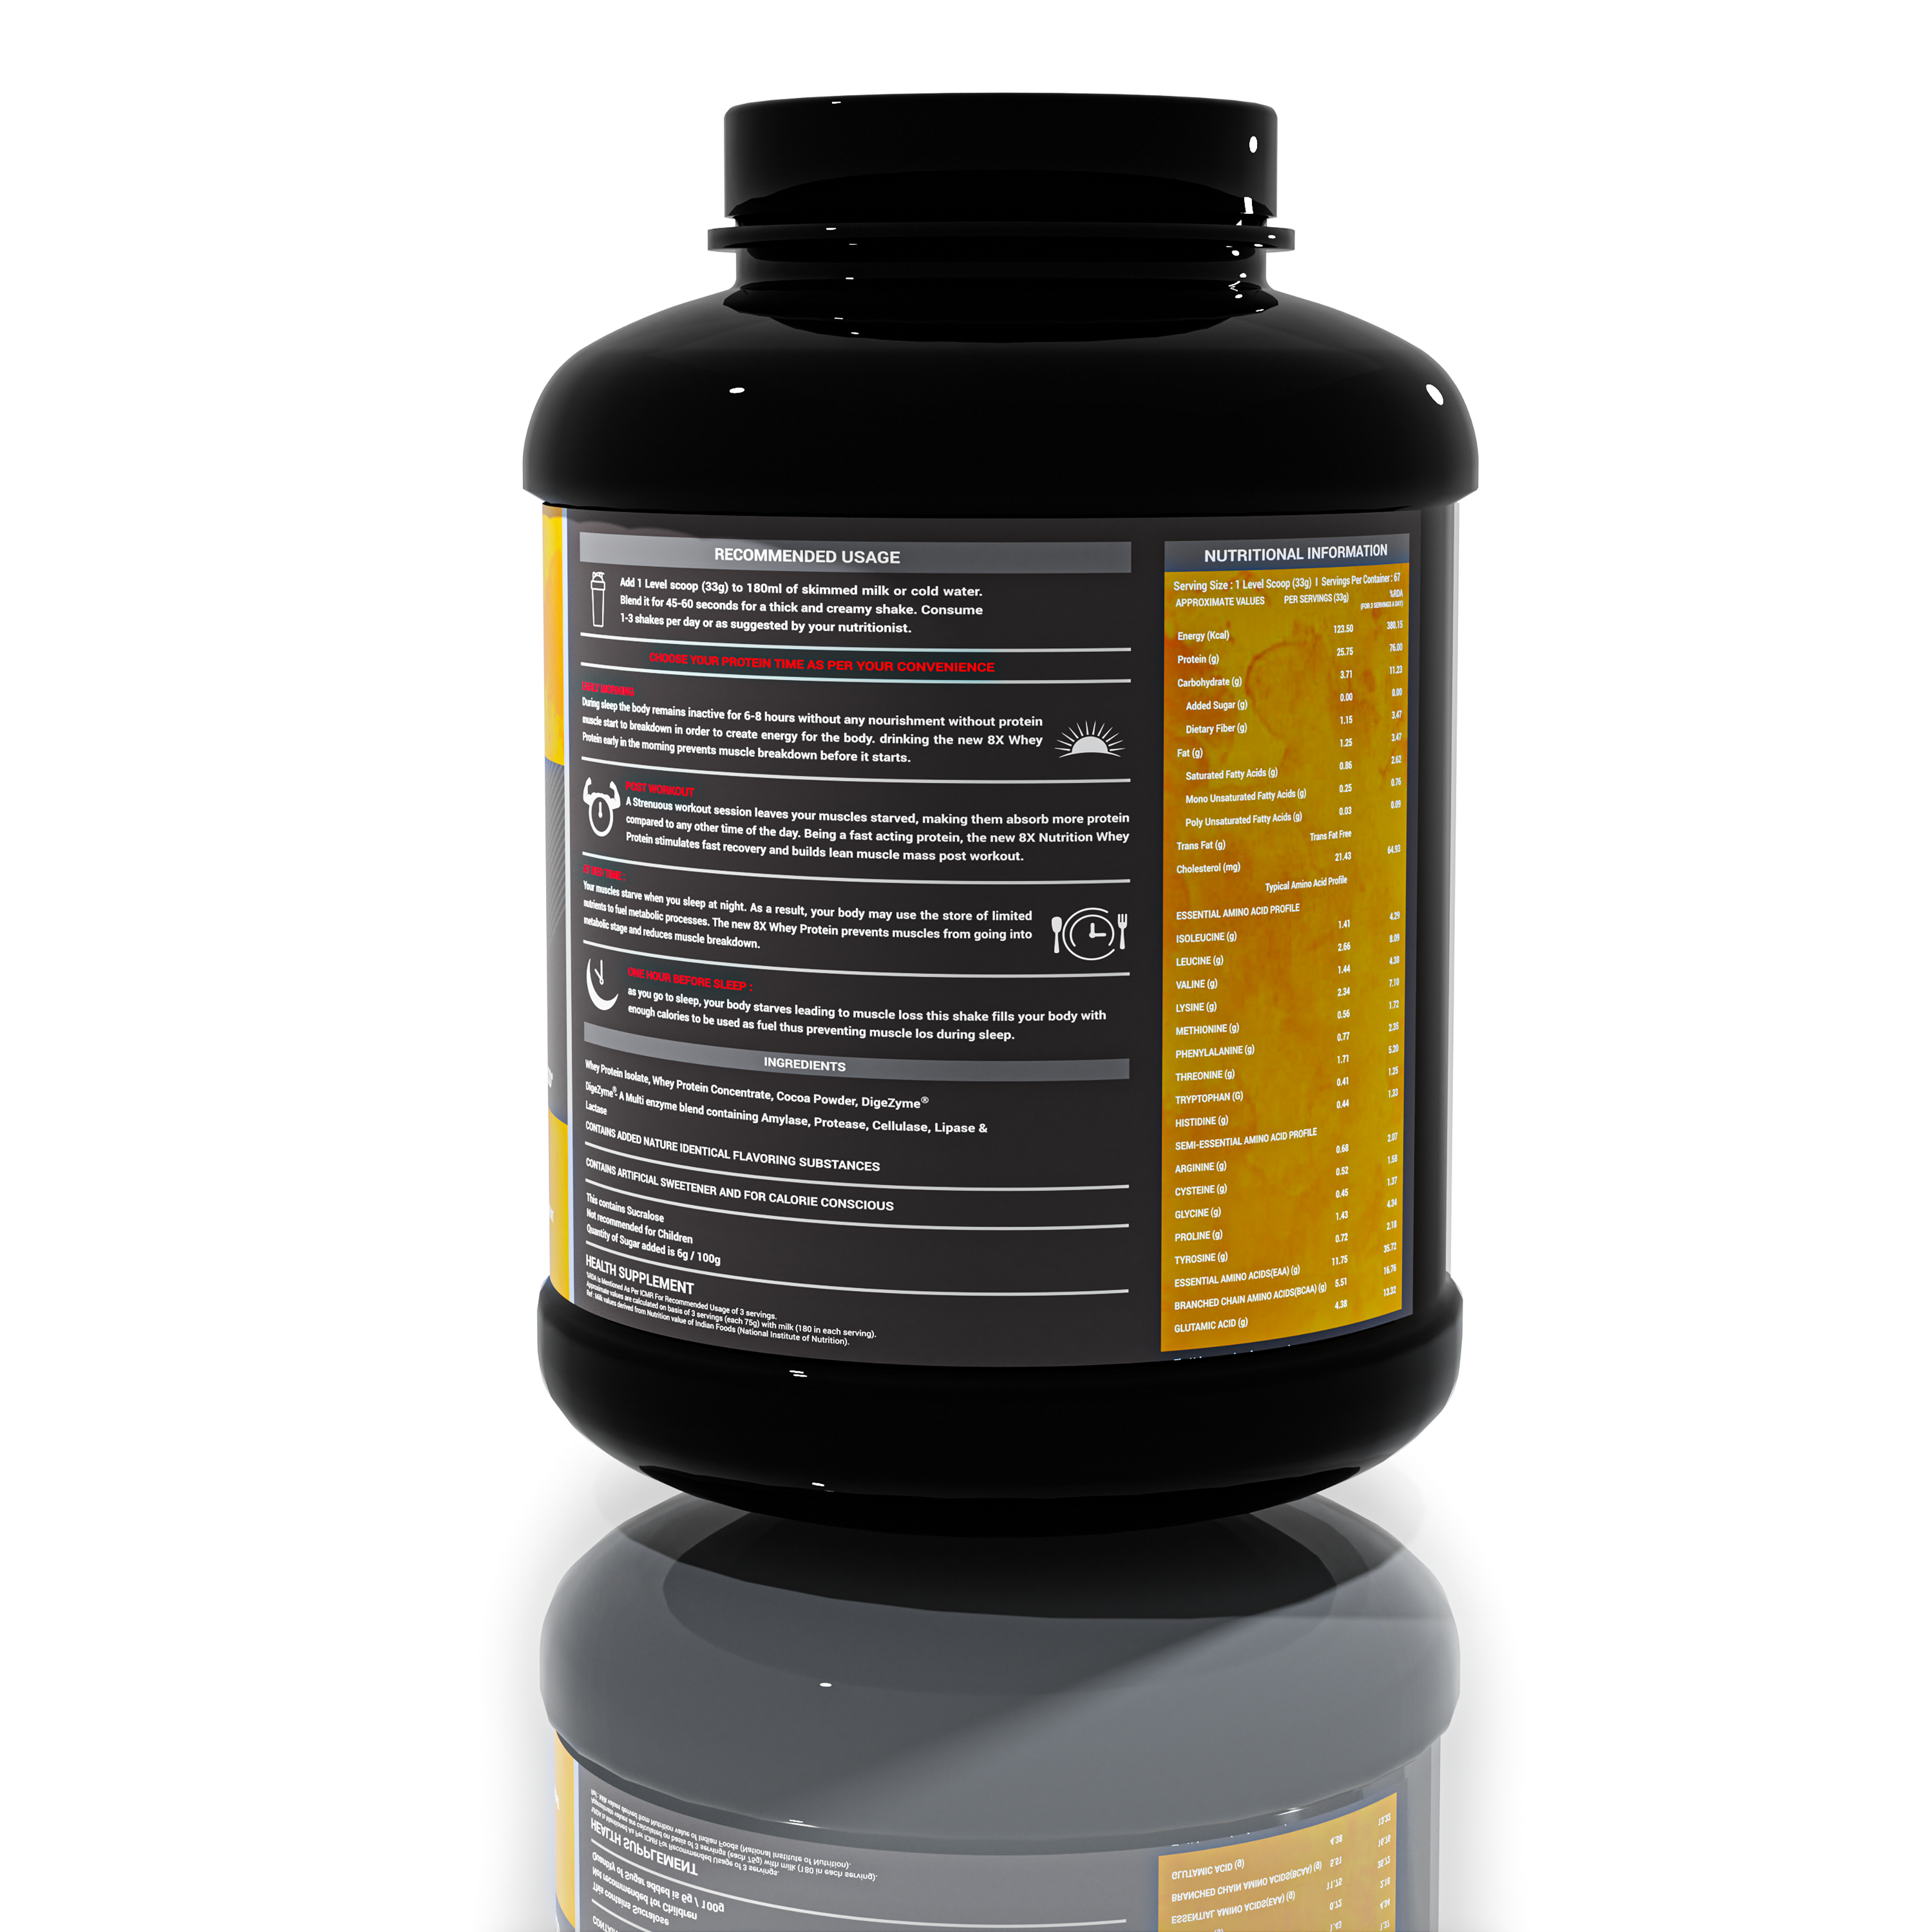 8X Nutrition Lean Protein Blend (5 LBS) - CREAMY STRAWBERRY SUNDAE